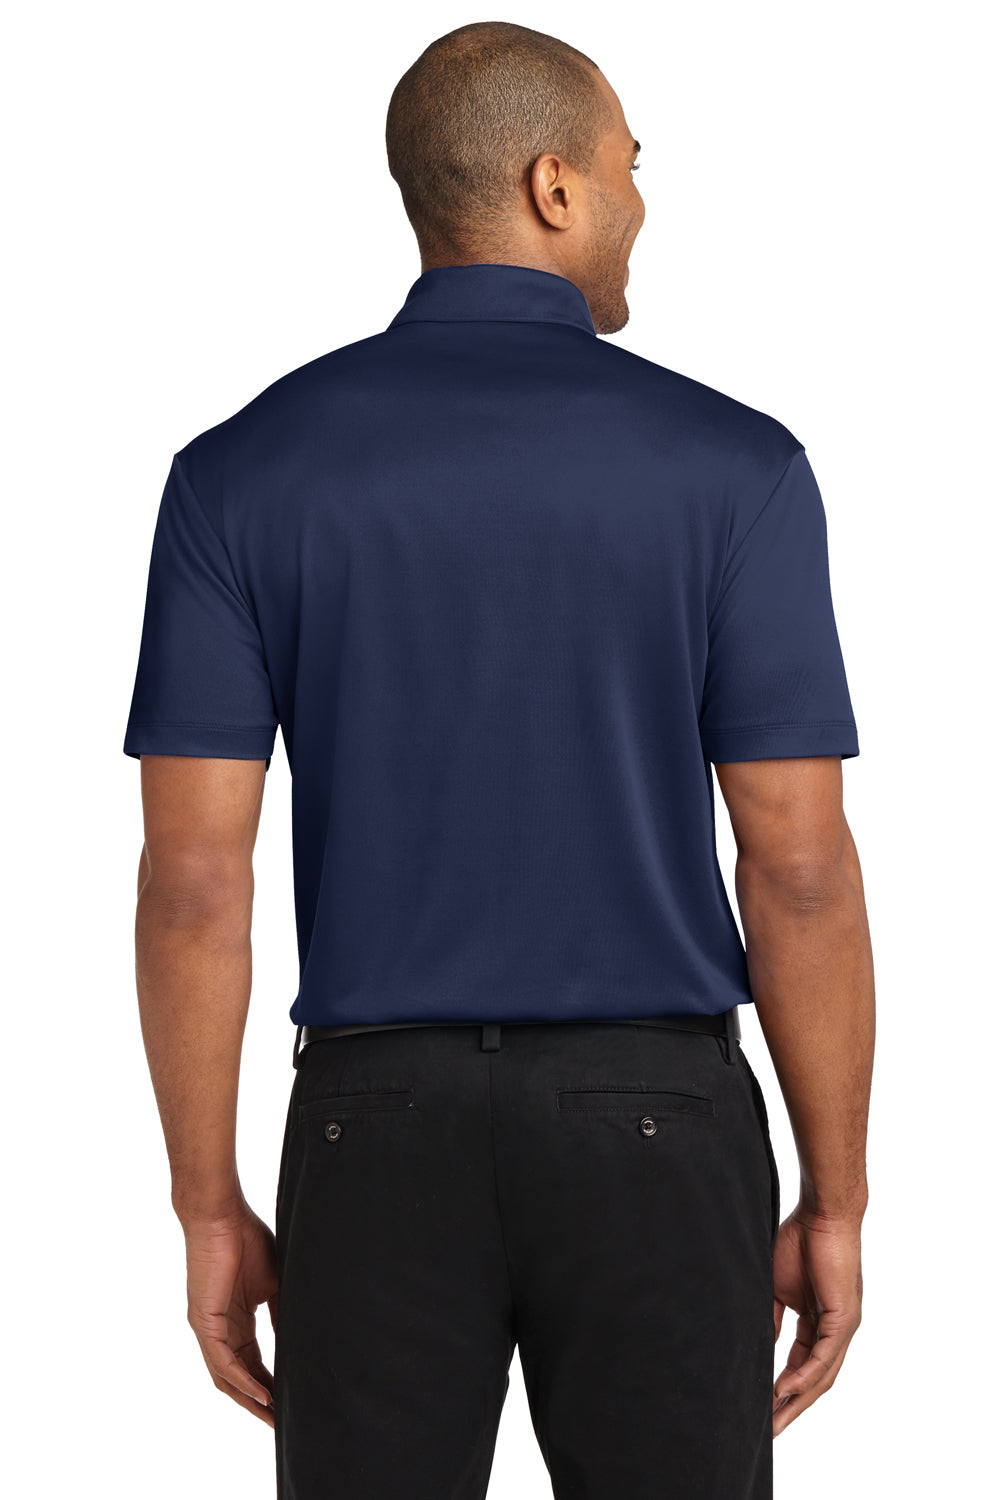 Port Authority K540P Mens Silk Touch Performance Moisture Wicking Short Sleeve Polo Shirt w/ Pocket Navy Blue Back